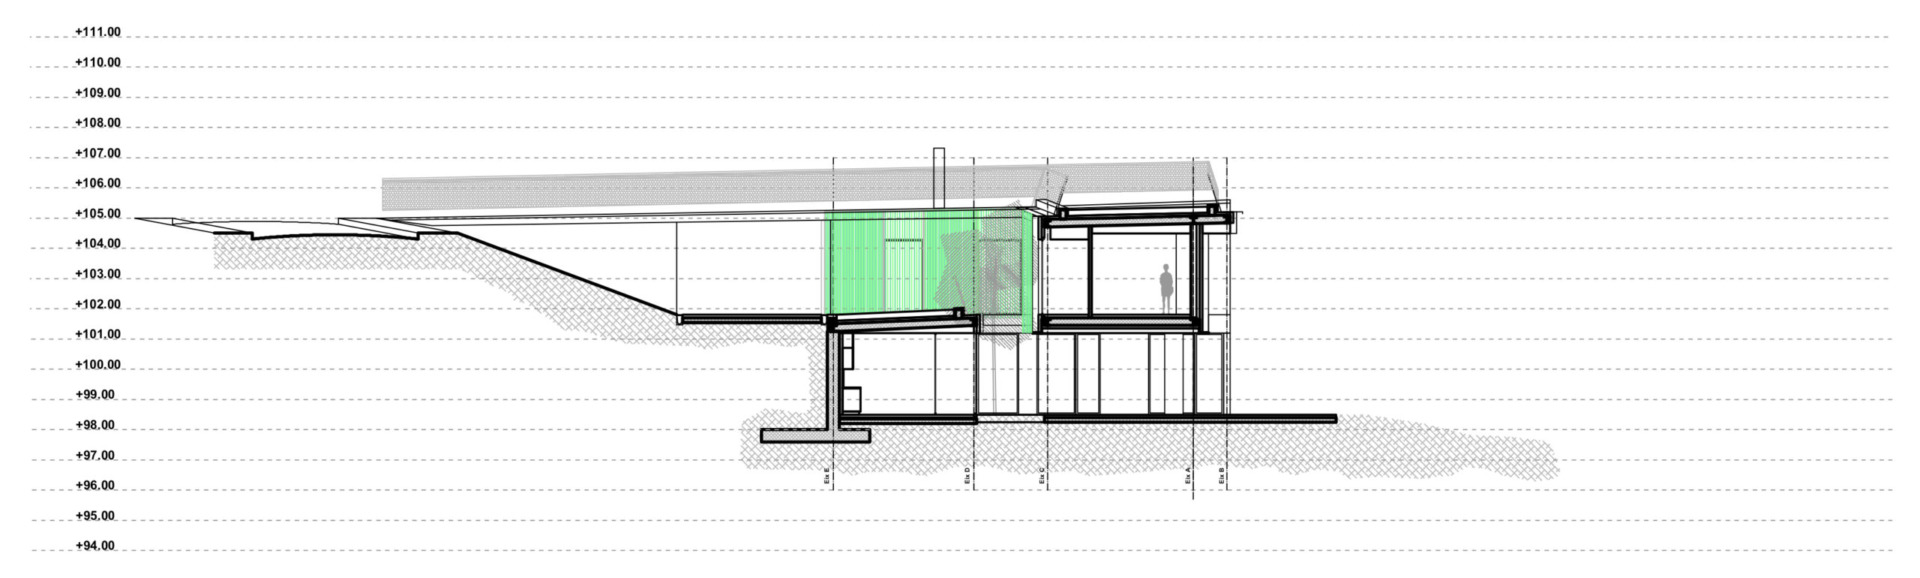 Sala Ferusic Architects Happy House Carles Sala Relja Ferusic